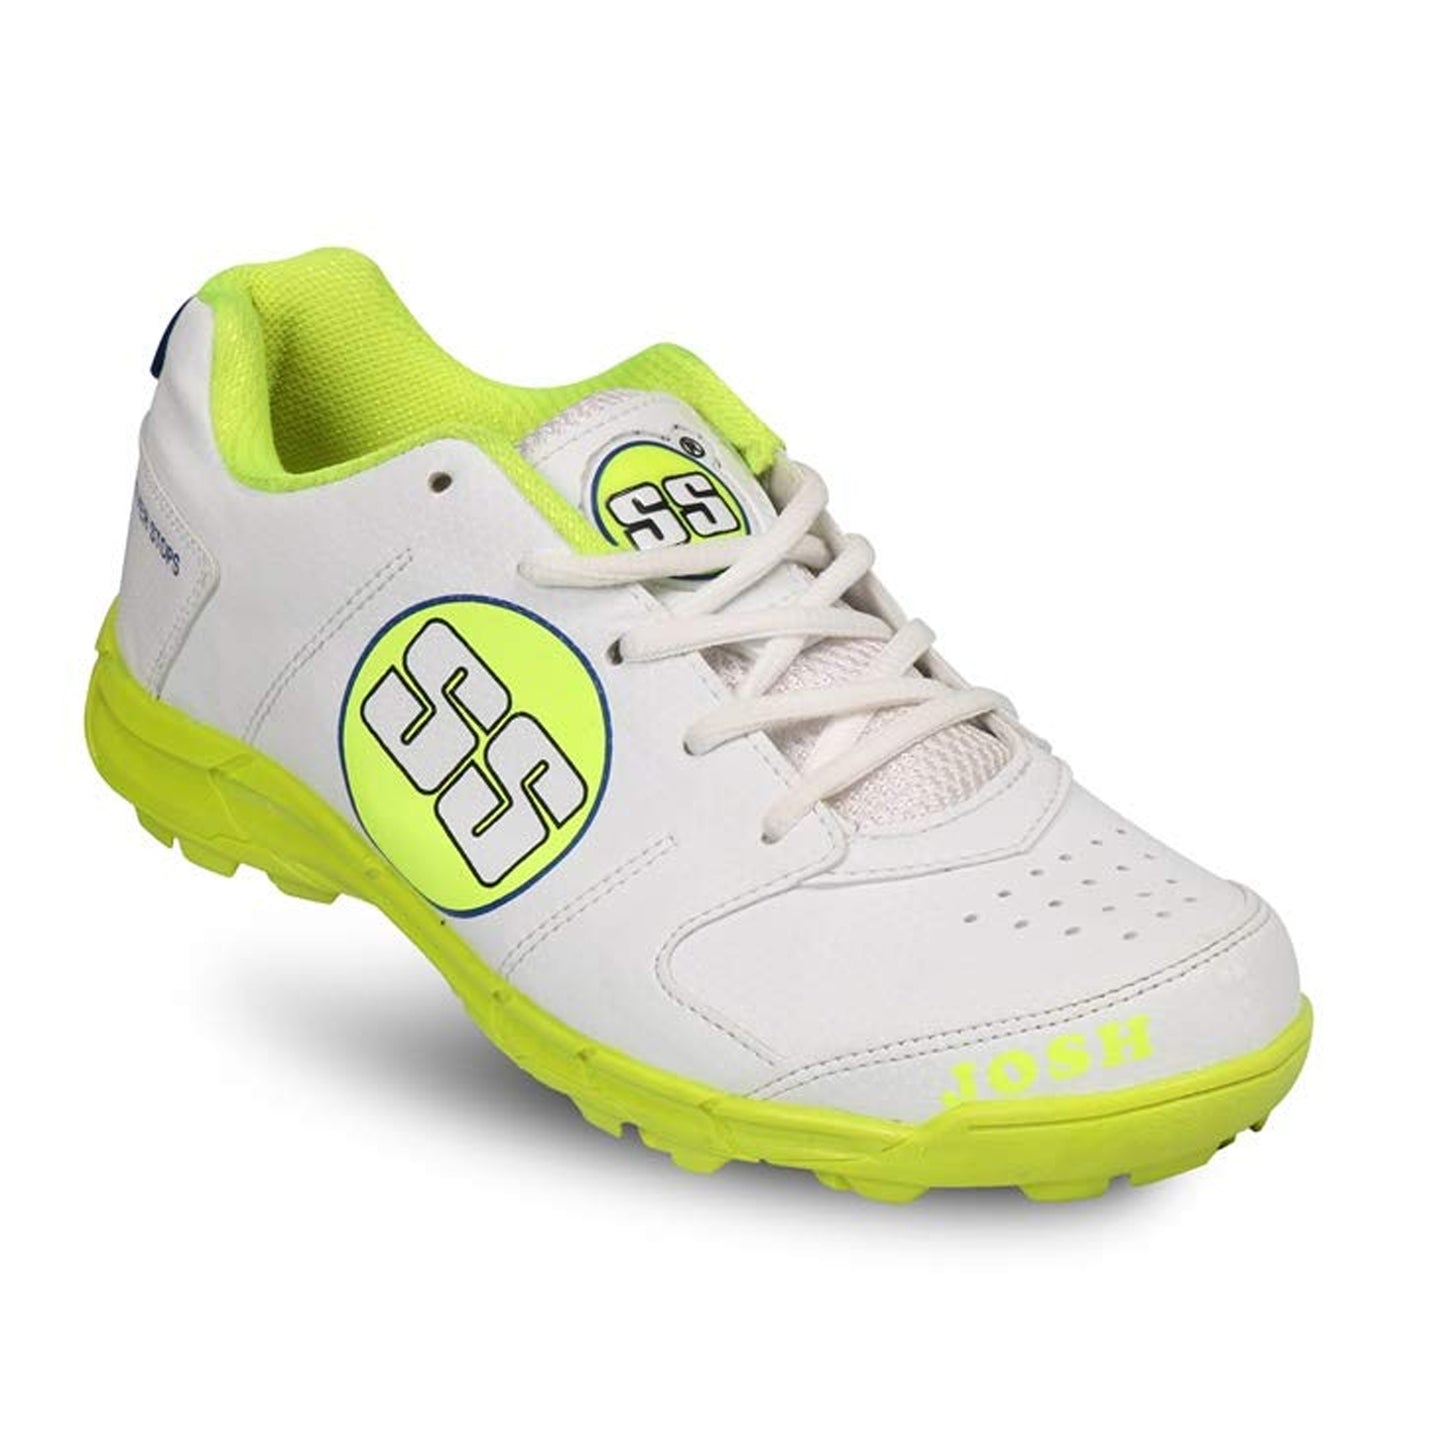 SS Spikes Cricket Shoes for Men - Josh, Neon Colors - Best Price online Prokicksports.com